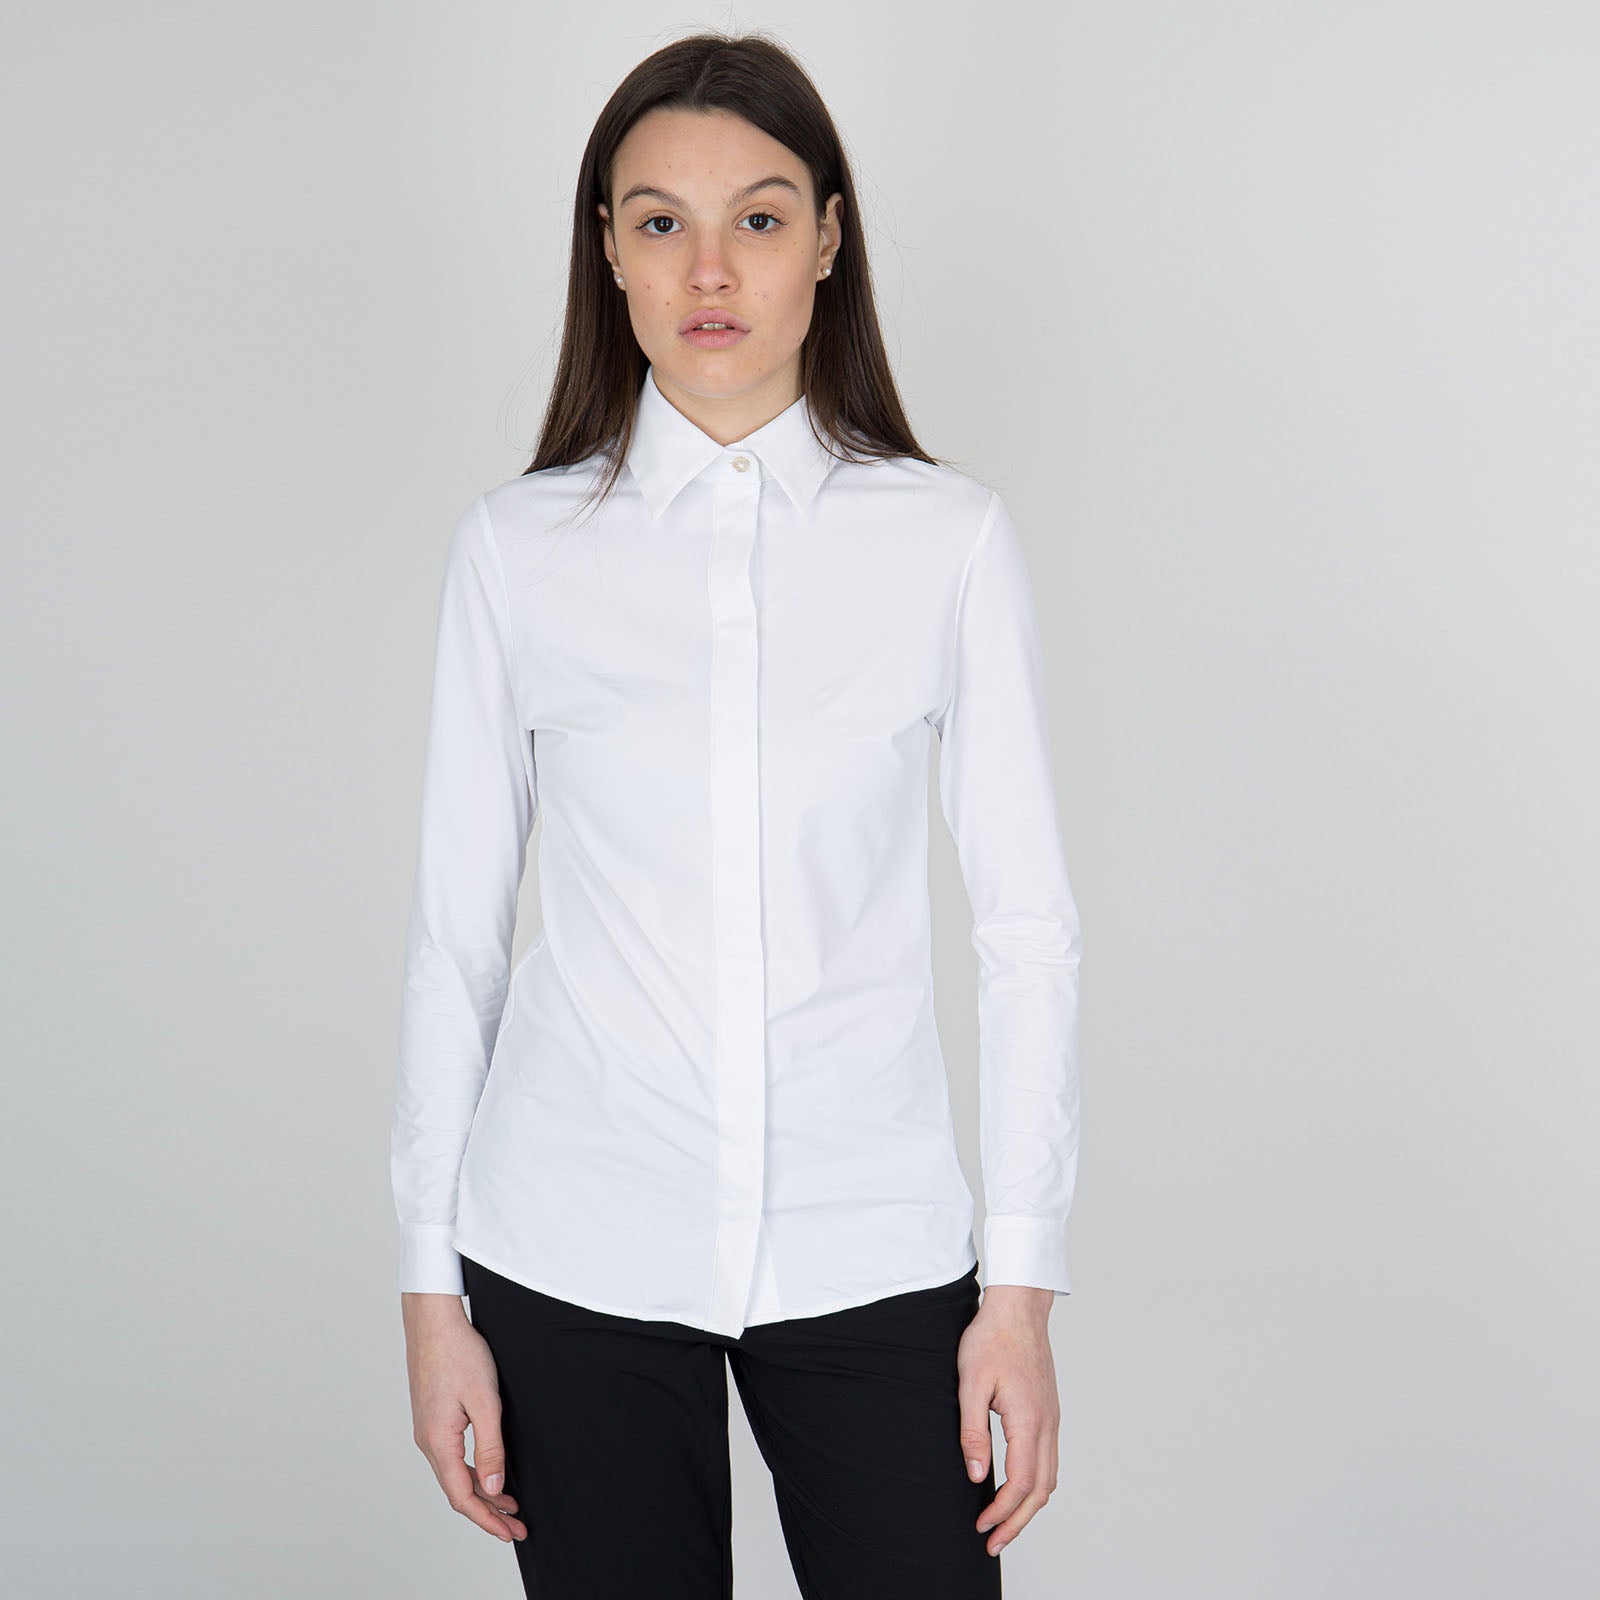 Shirty Oxford Plain Woman Shirt - 7